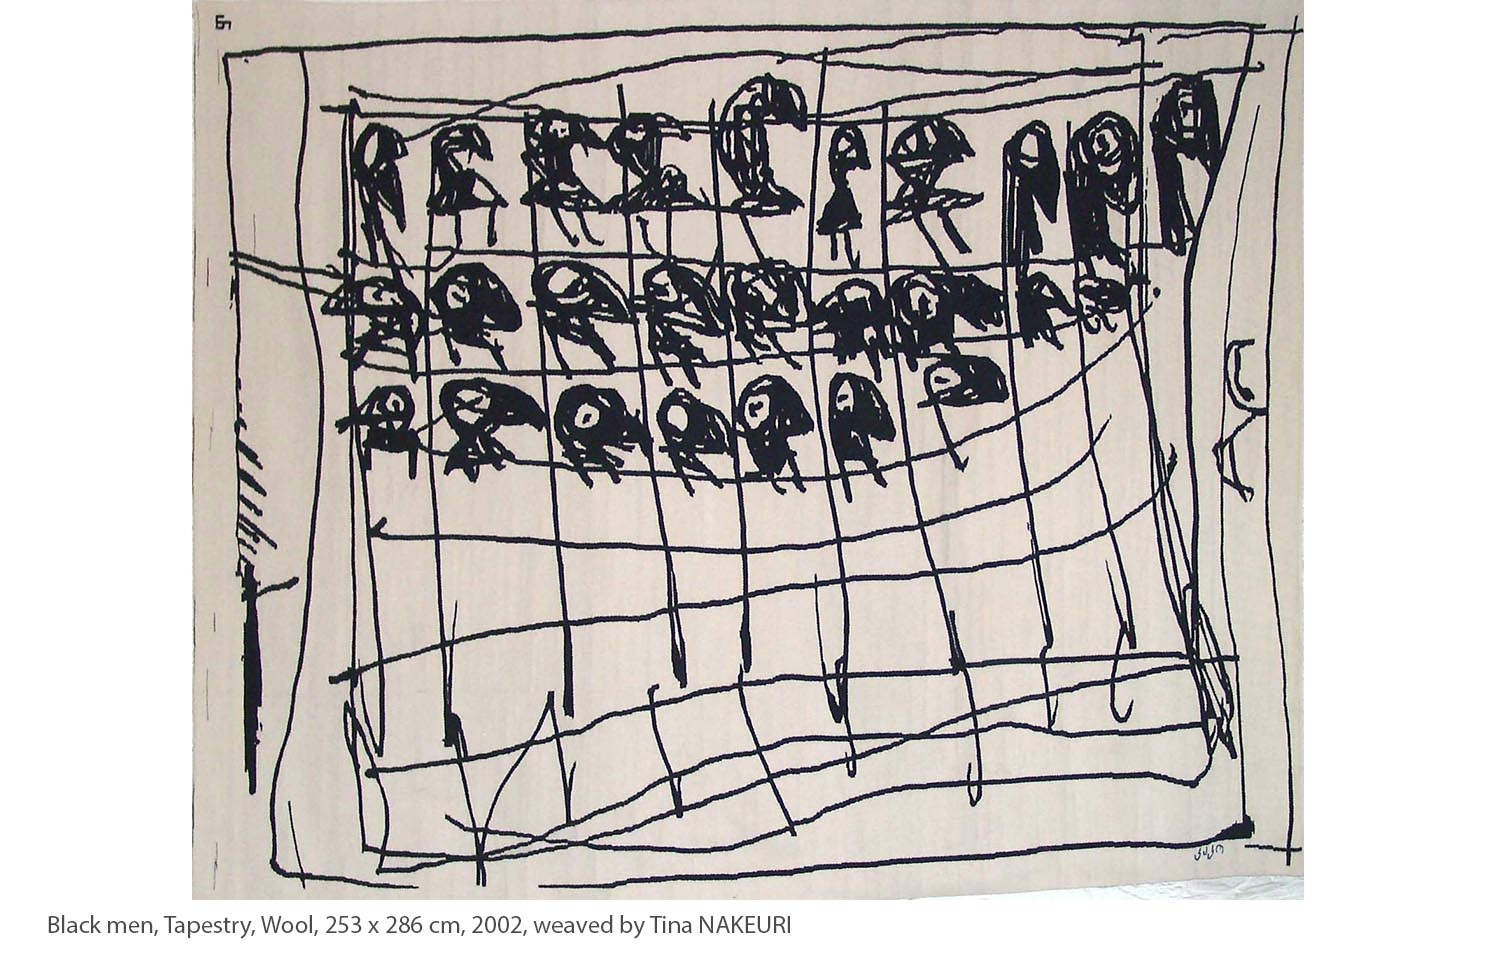 KAKO-Black-men-Tapestry-Wool-253-x-286-cm-2002-weaved-by-Tina-NAKEURI